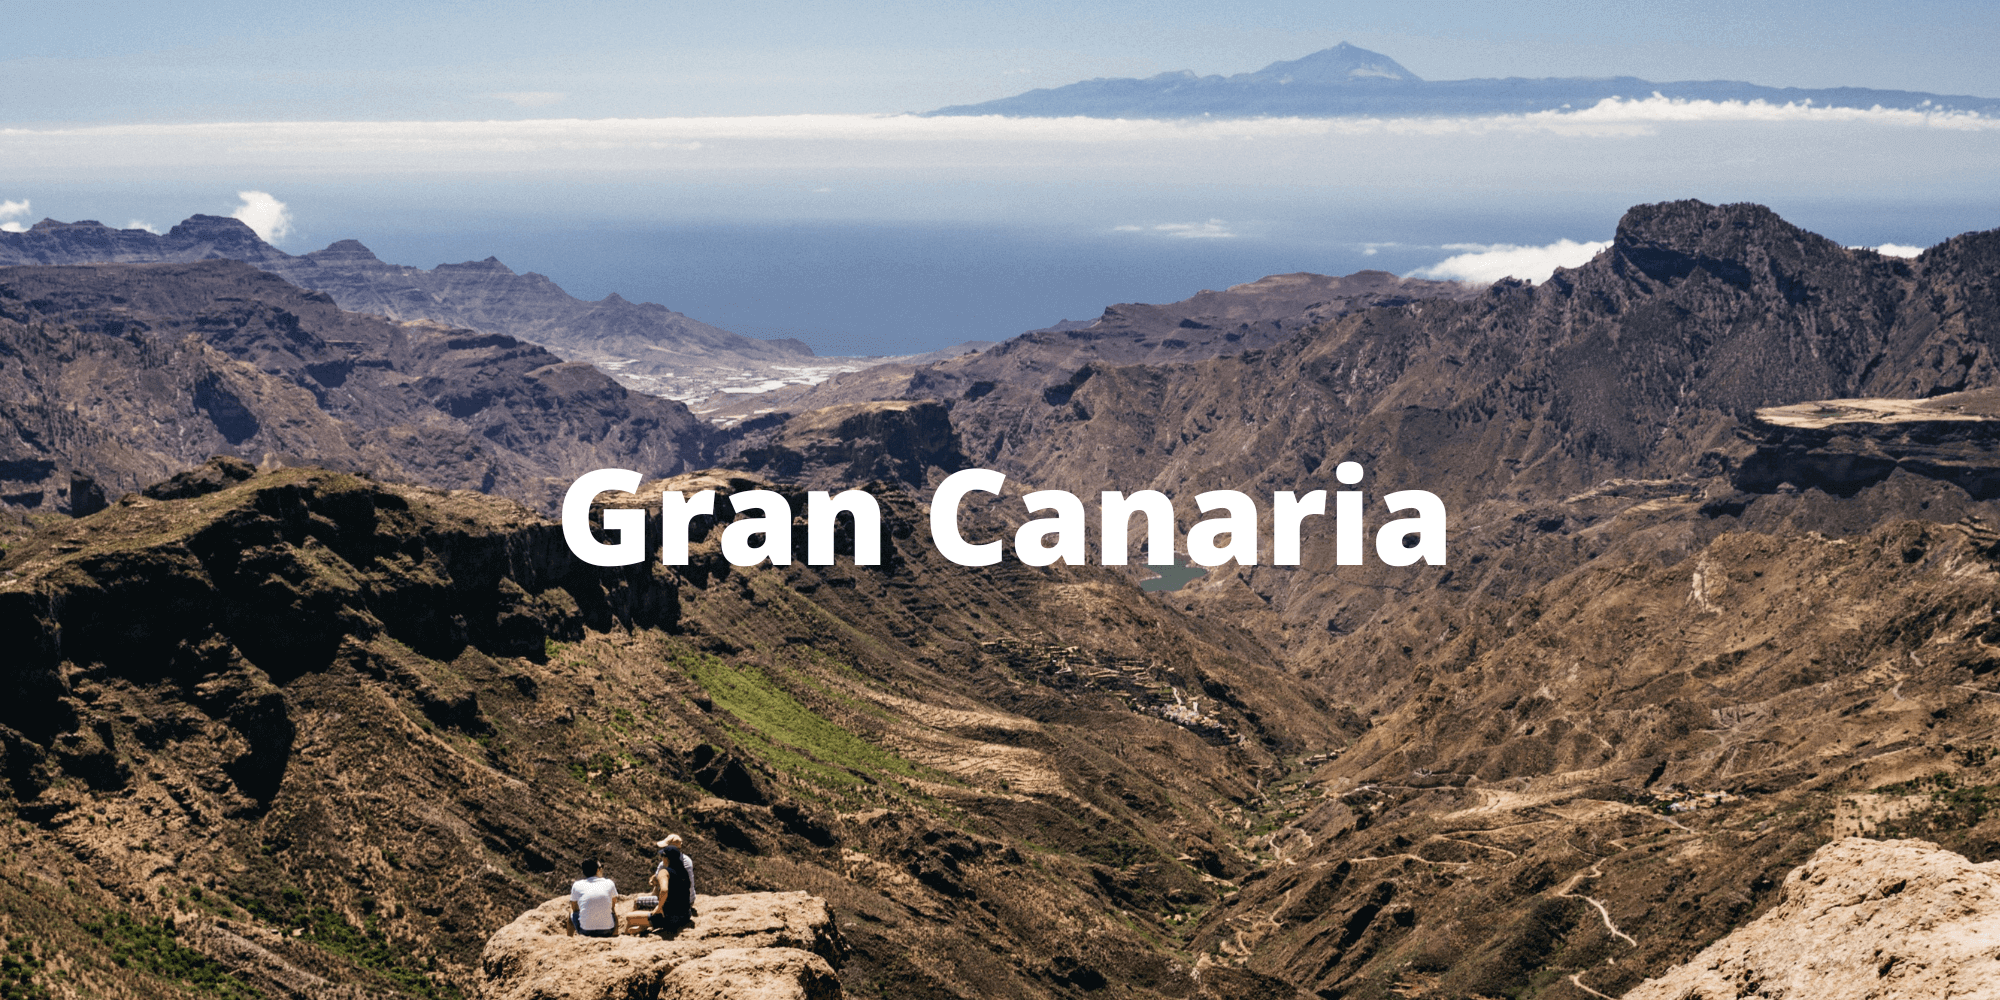 Gran Canaria View for for Destination Hub